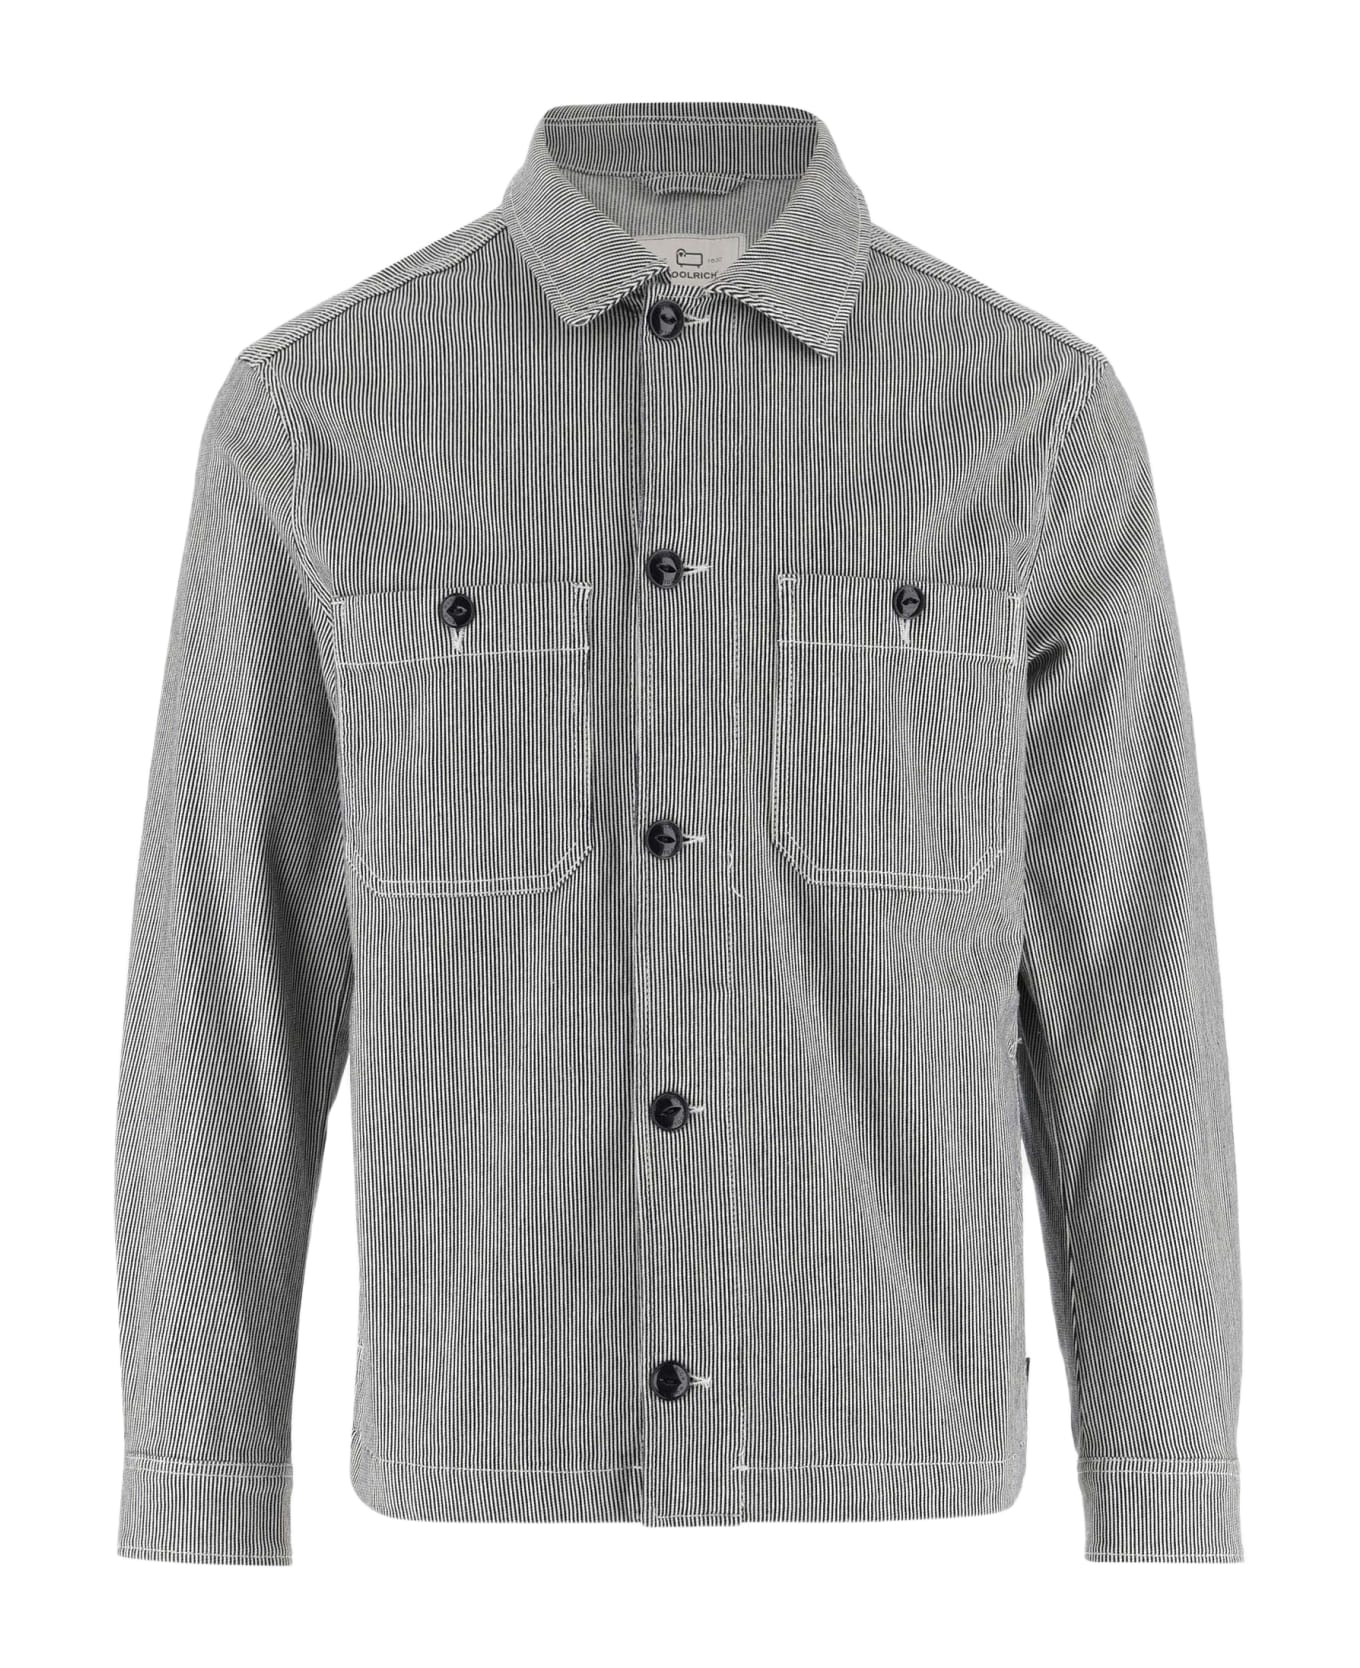 Woolrich Striped Cotton Shirt - Grey